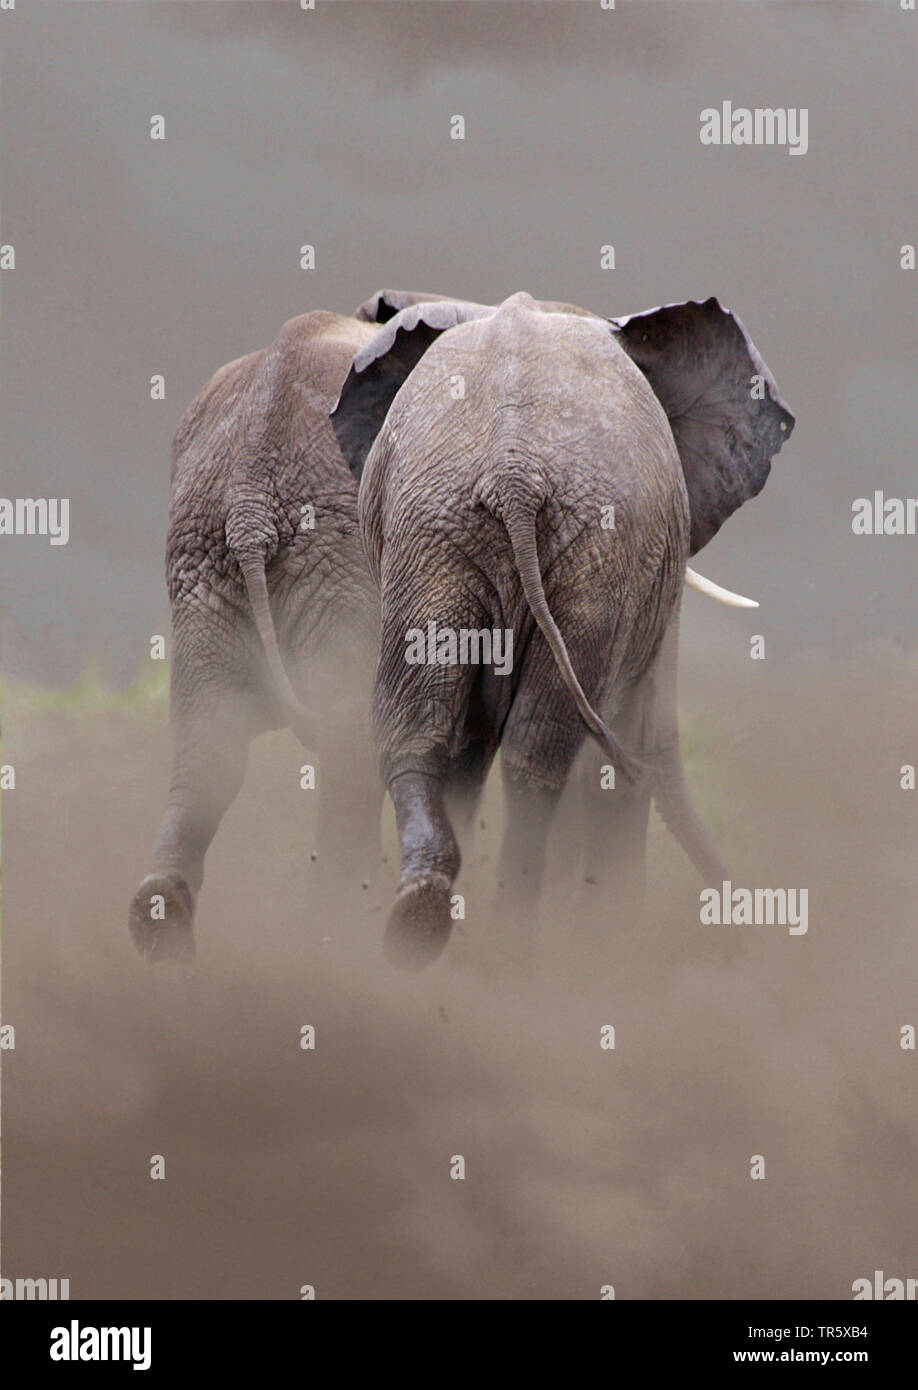 Elefante africano (Loxodonta africana), due elefanti in fuga, vista posteriore in un dustcloud Foto Stock